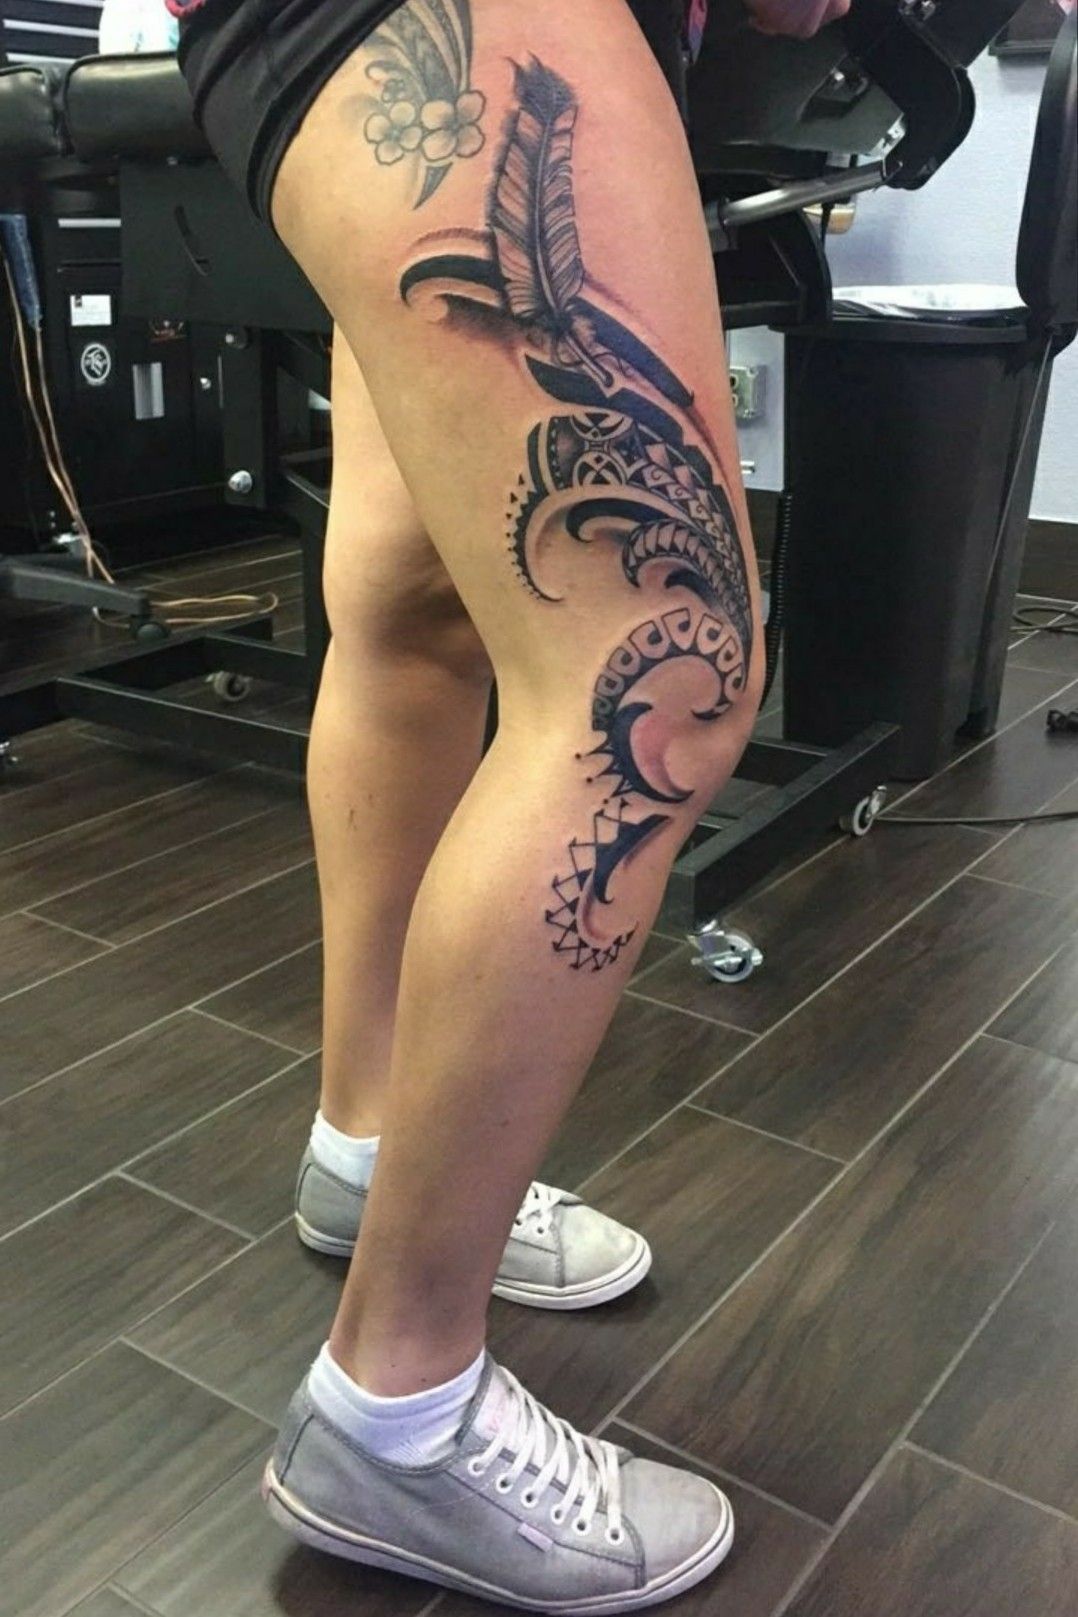 Ordershock Finger Tattoo MoonGalaxyKey Heart Waterproof Temporary Tattoo  For Girls and Boys  Amazonin Beauty